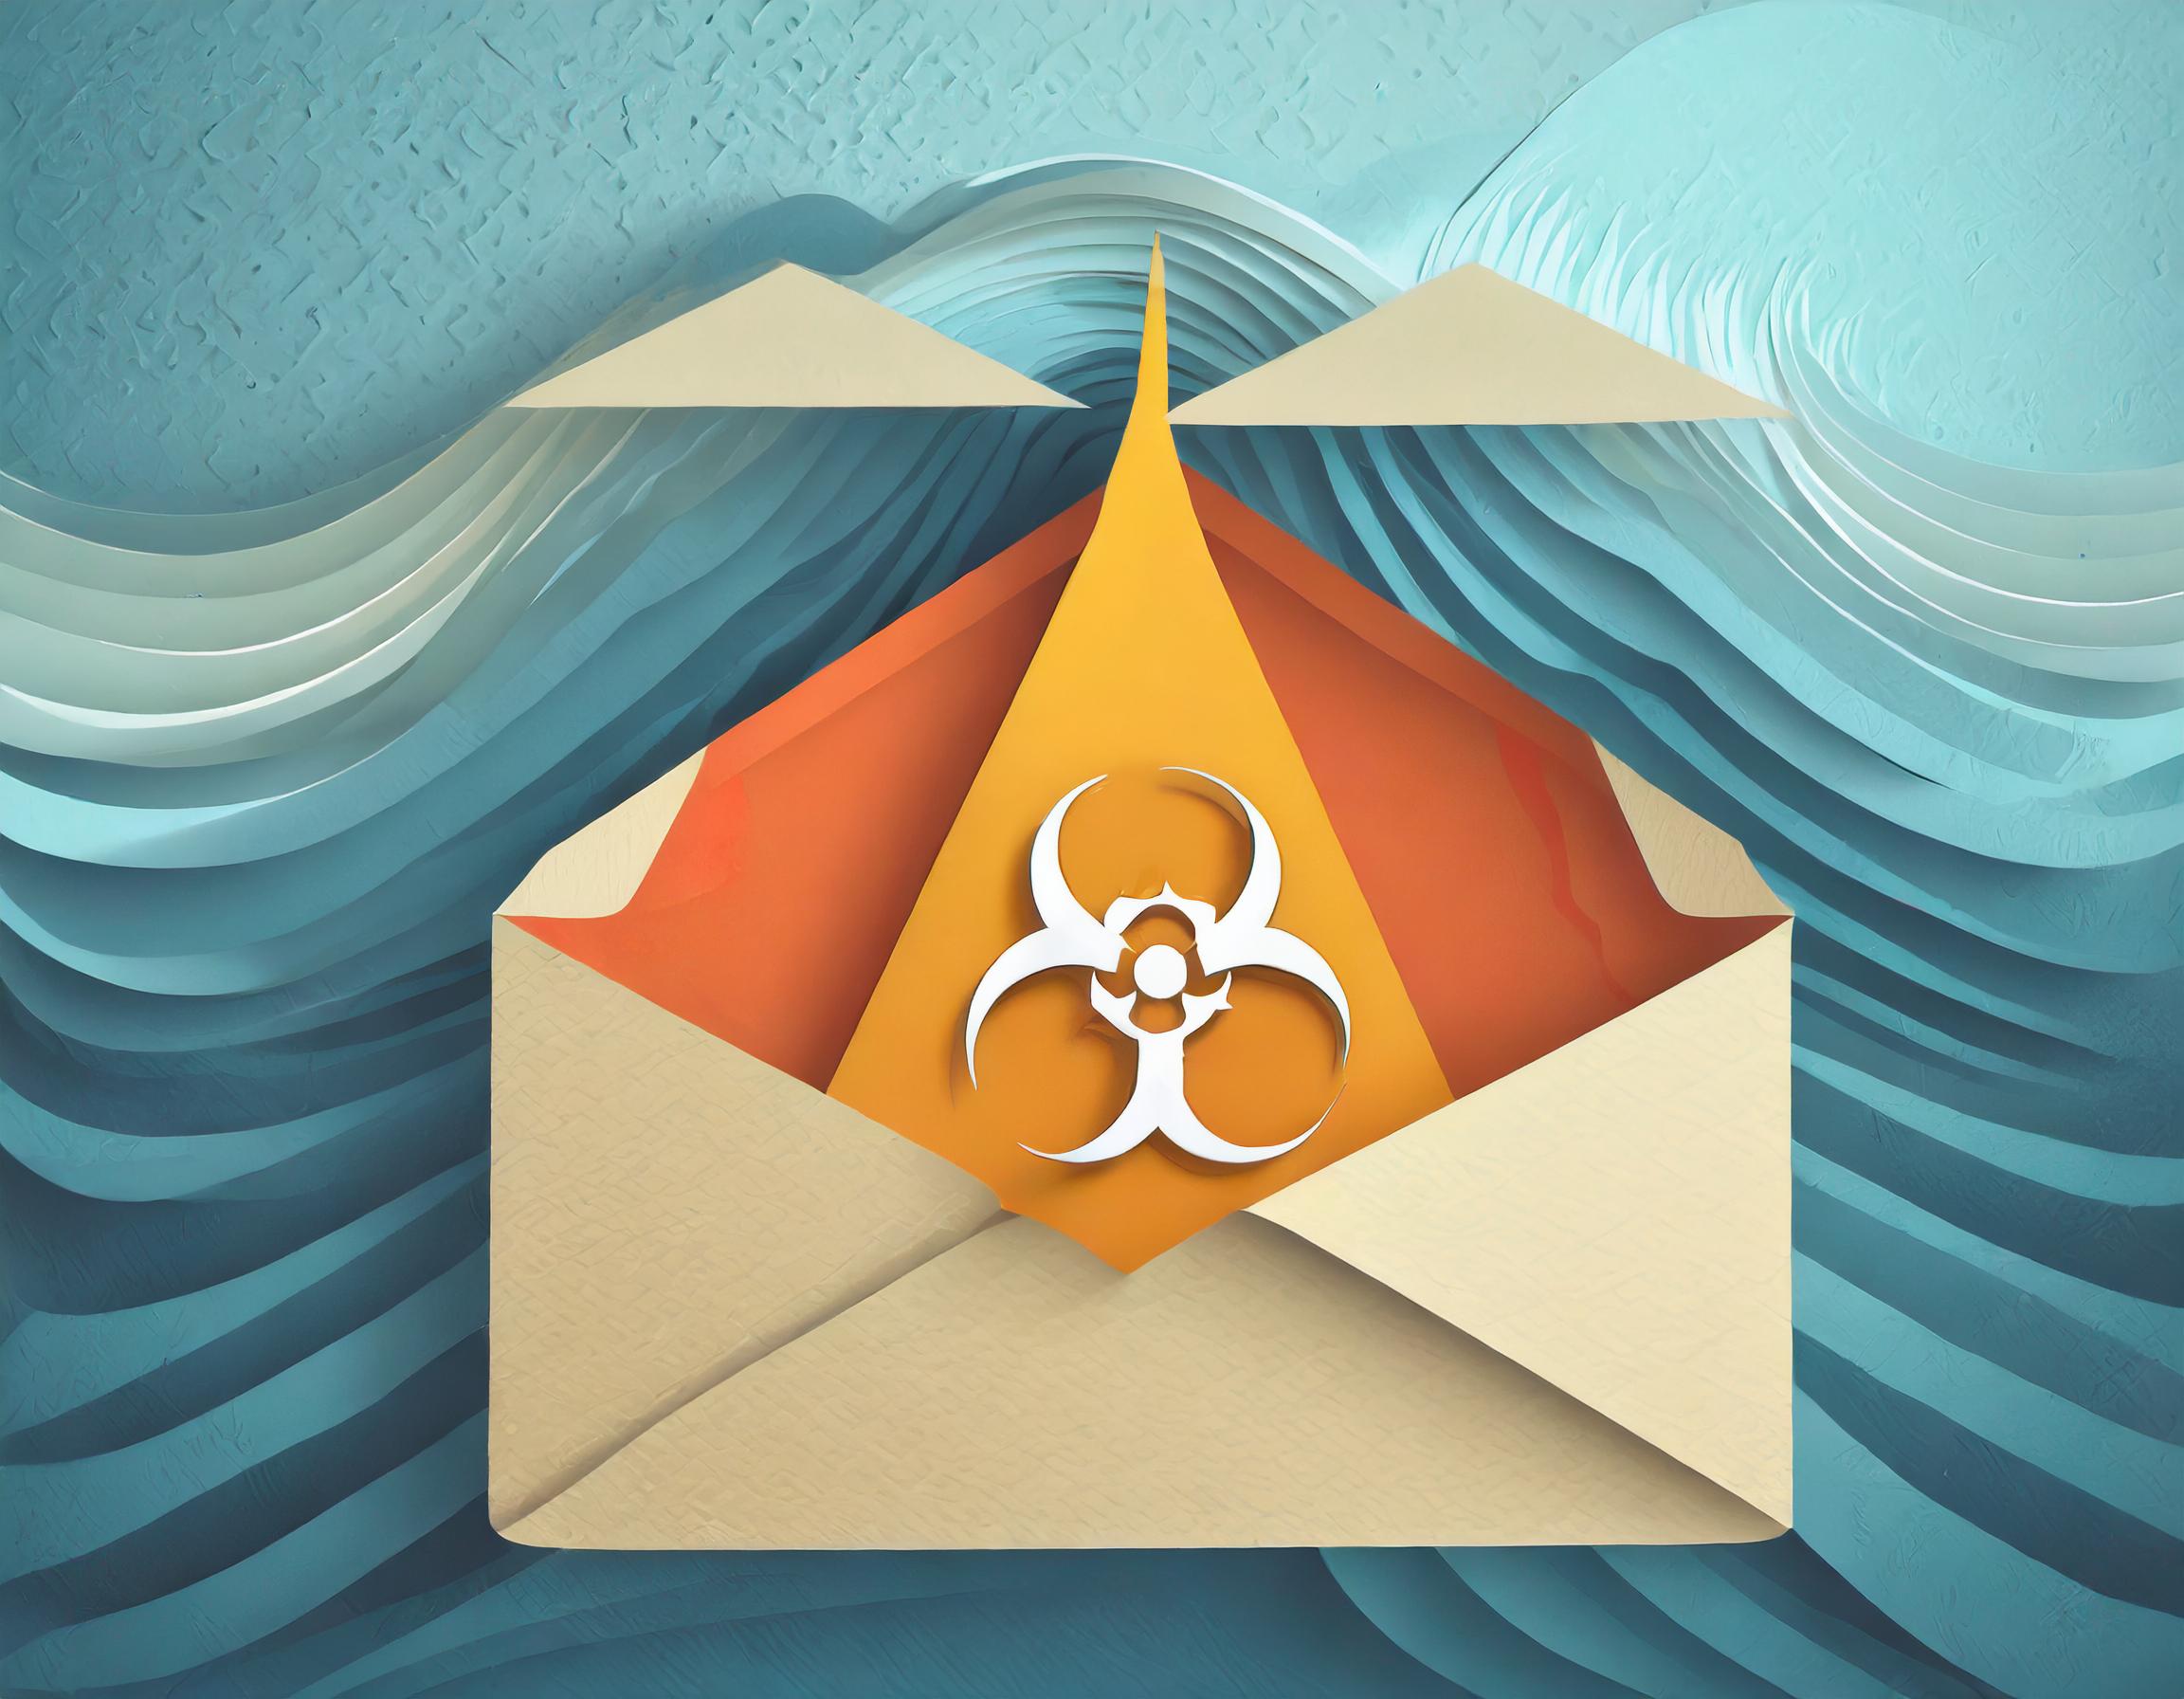 Envelope with a biohazard symbol